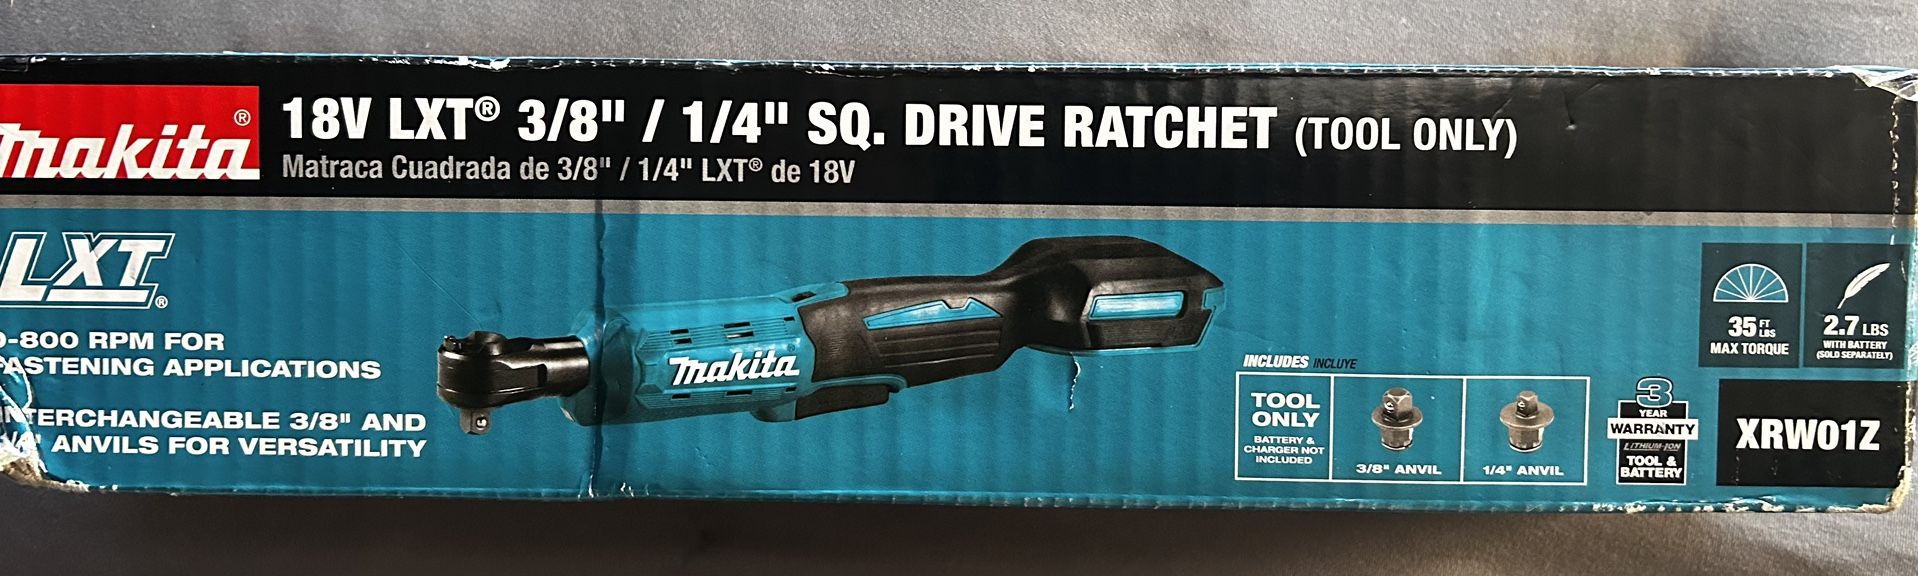 Makita 18V Drive Ratchet 